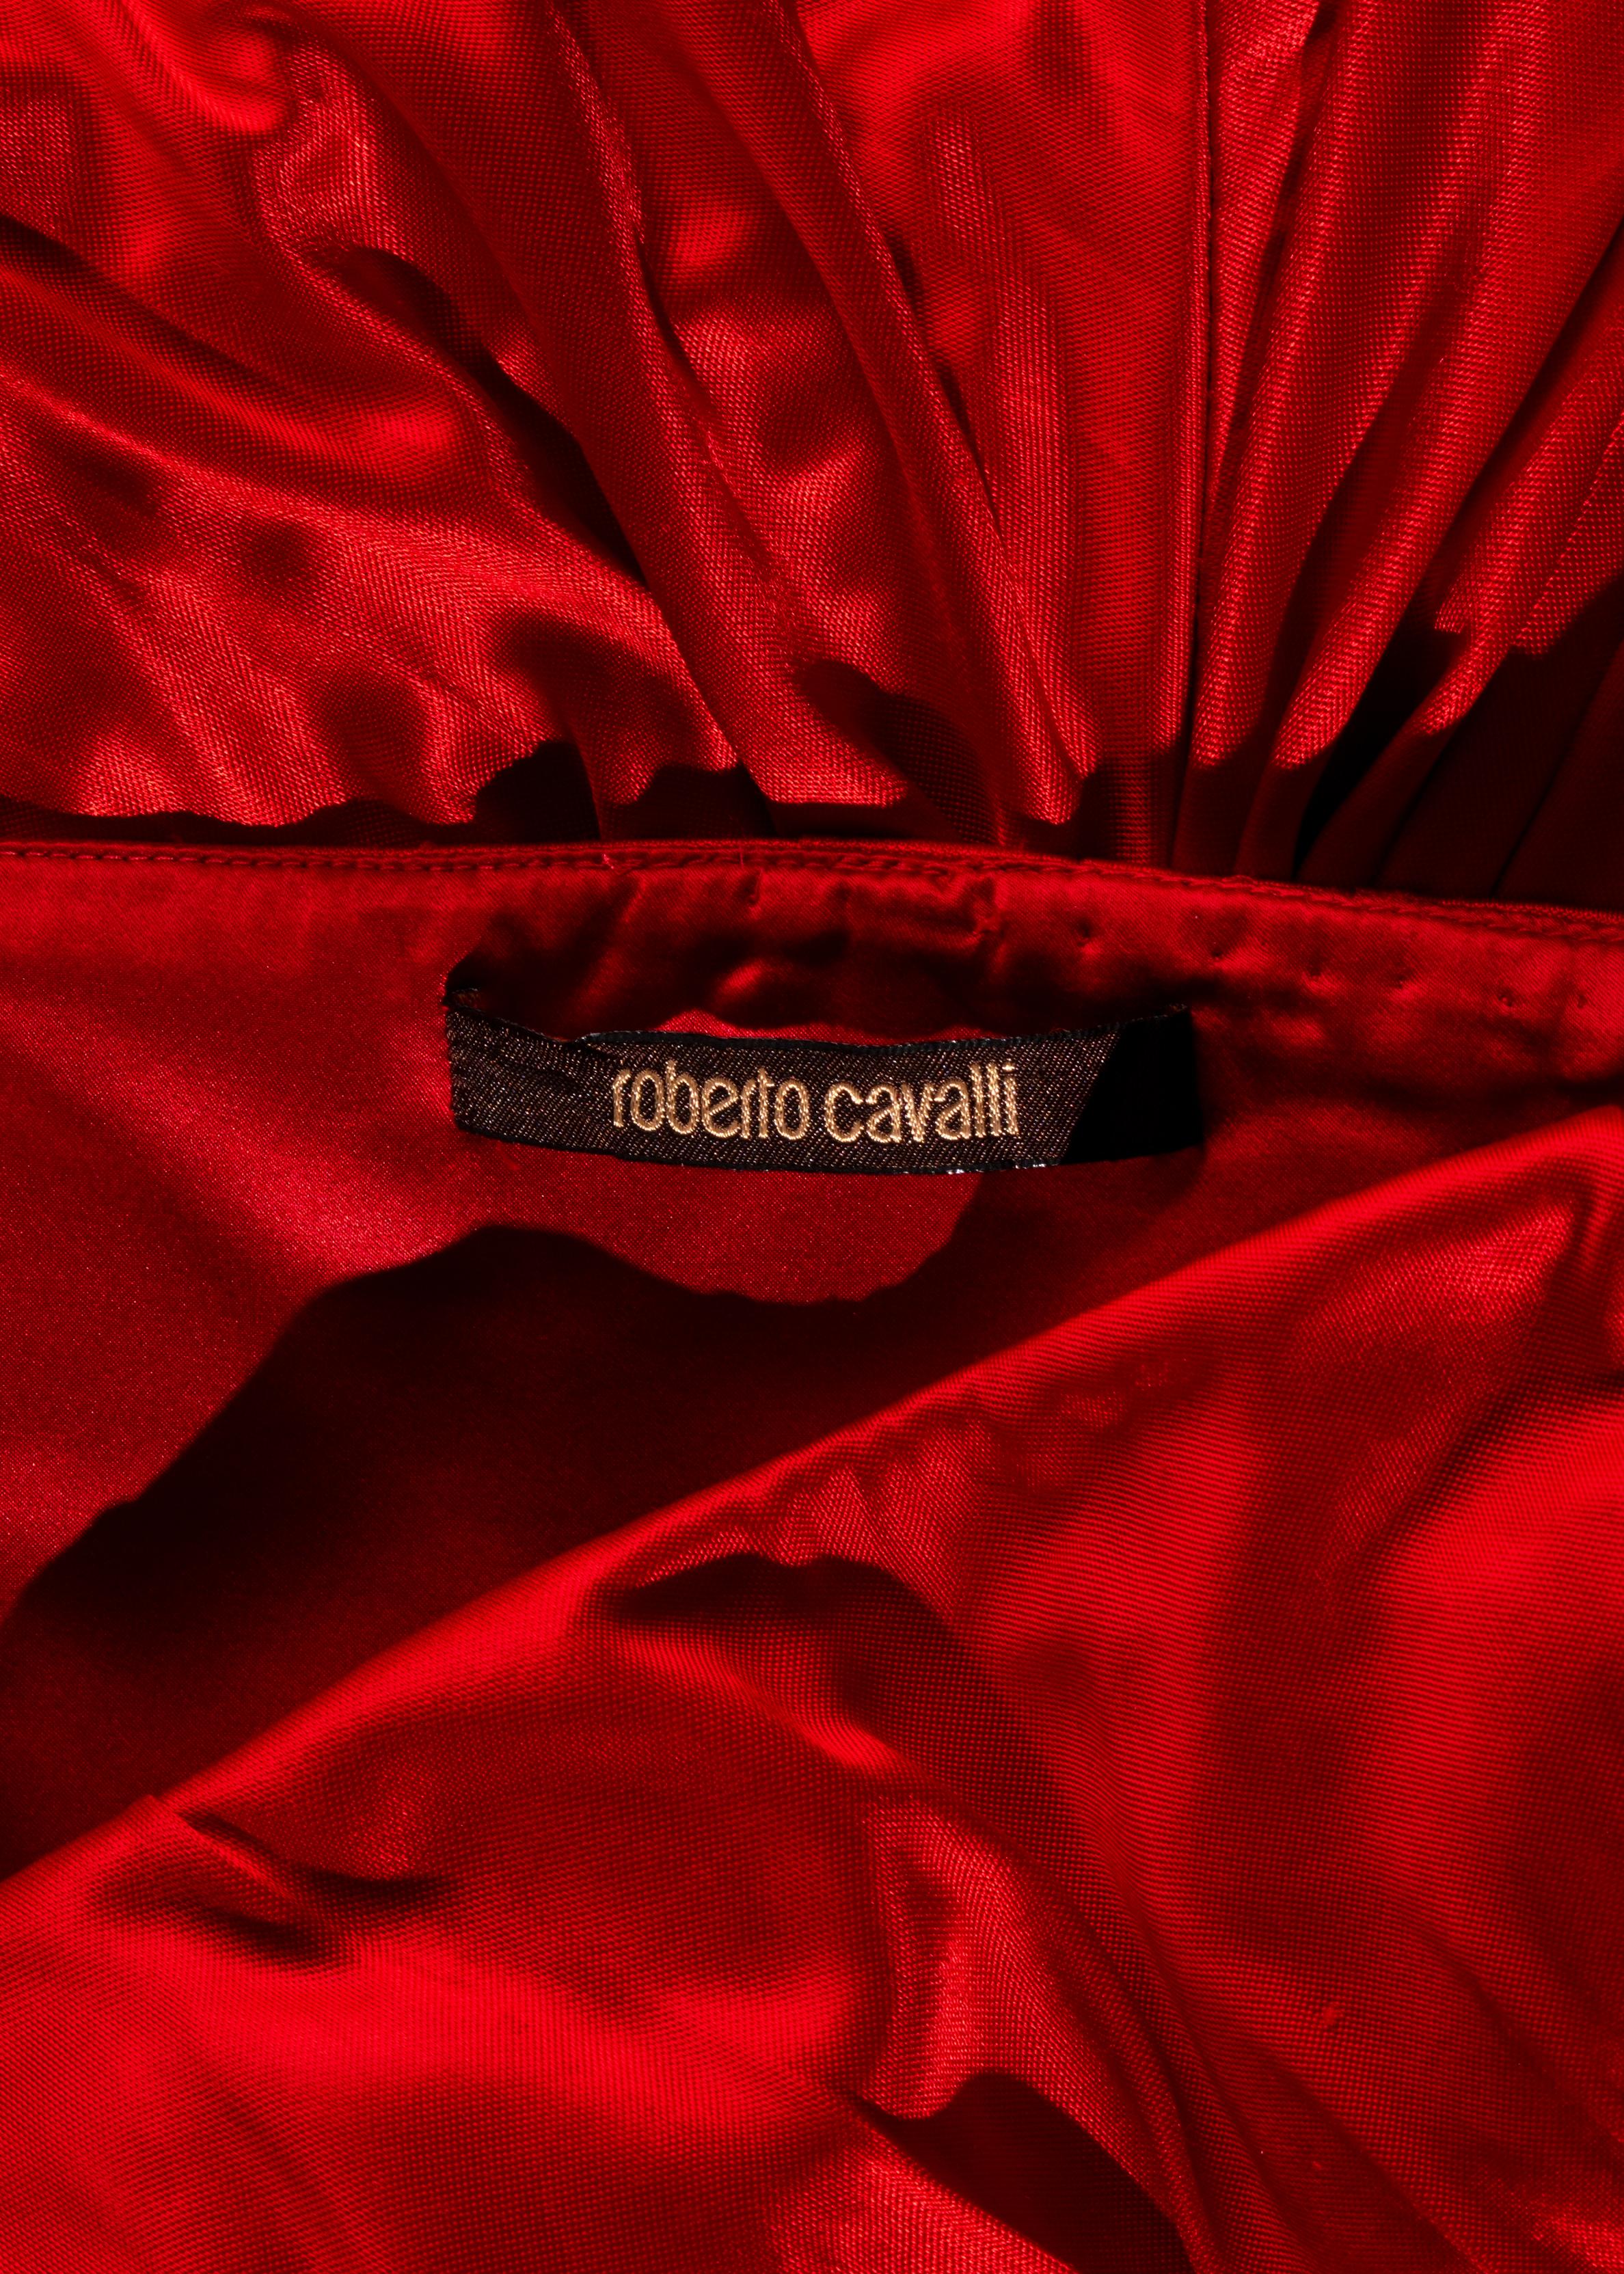 Women's Roberto Cavalli red pleated viscose evening mini dress, c. 2000s